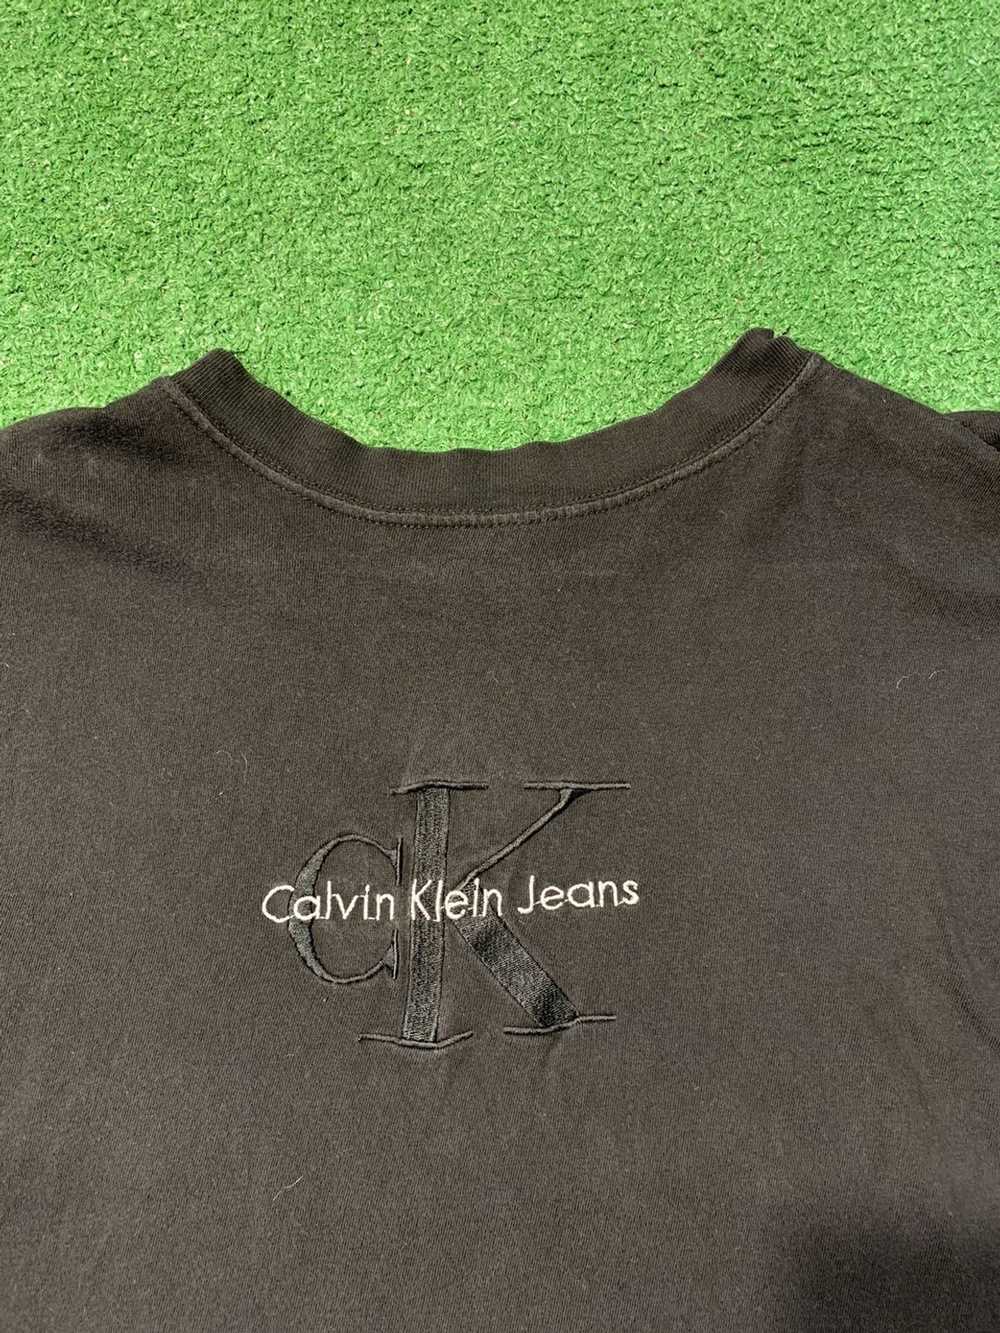 Calvin Klein × Vintage Vintage Calvin Klein tee - image 2